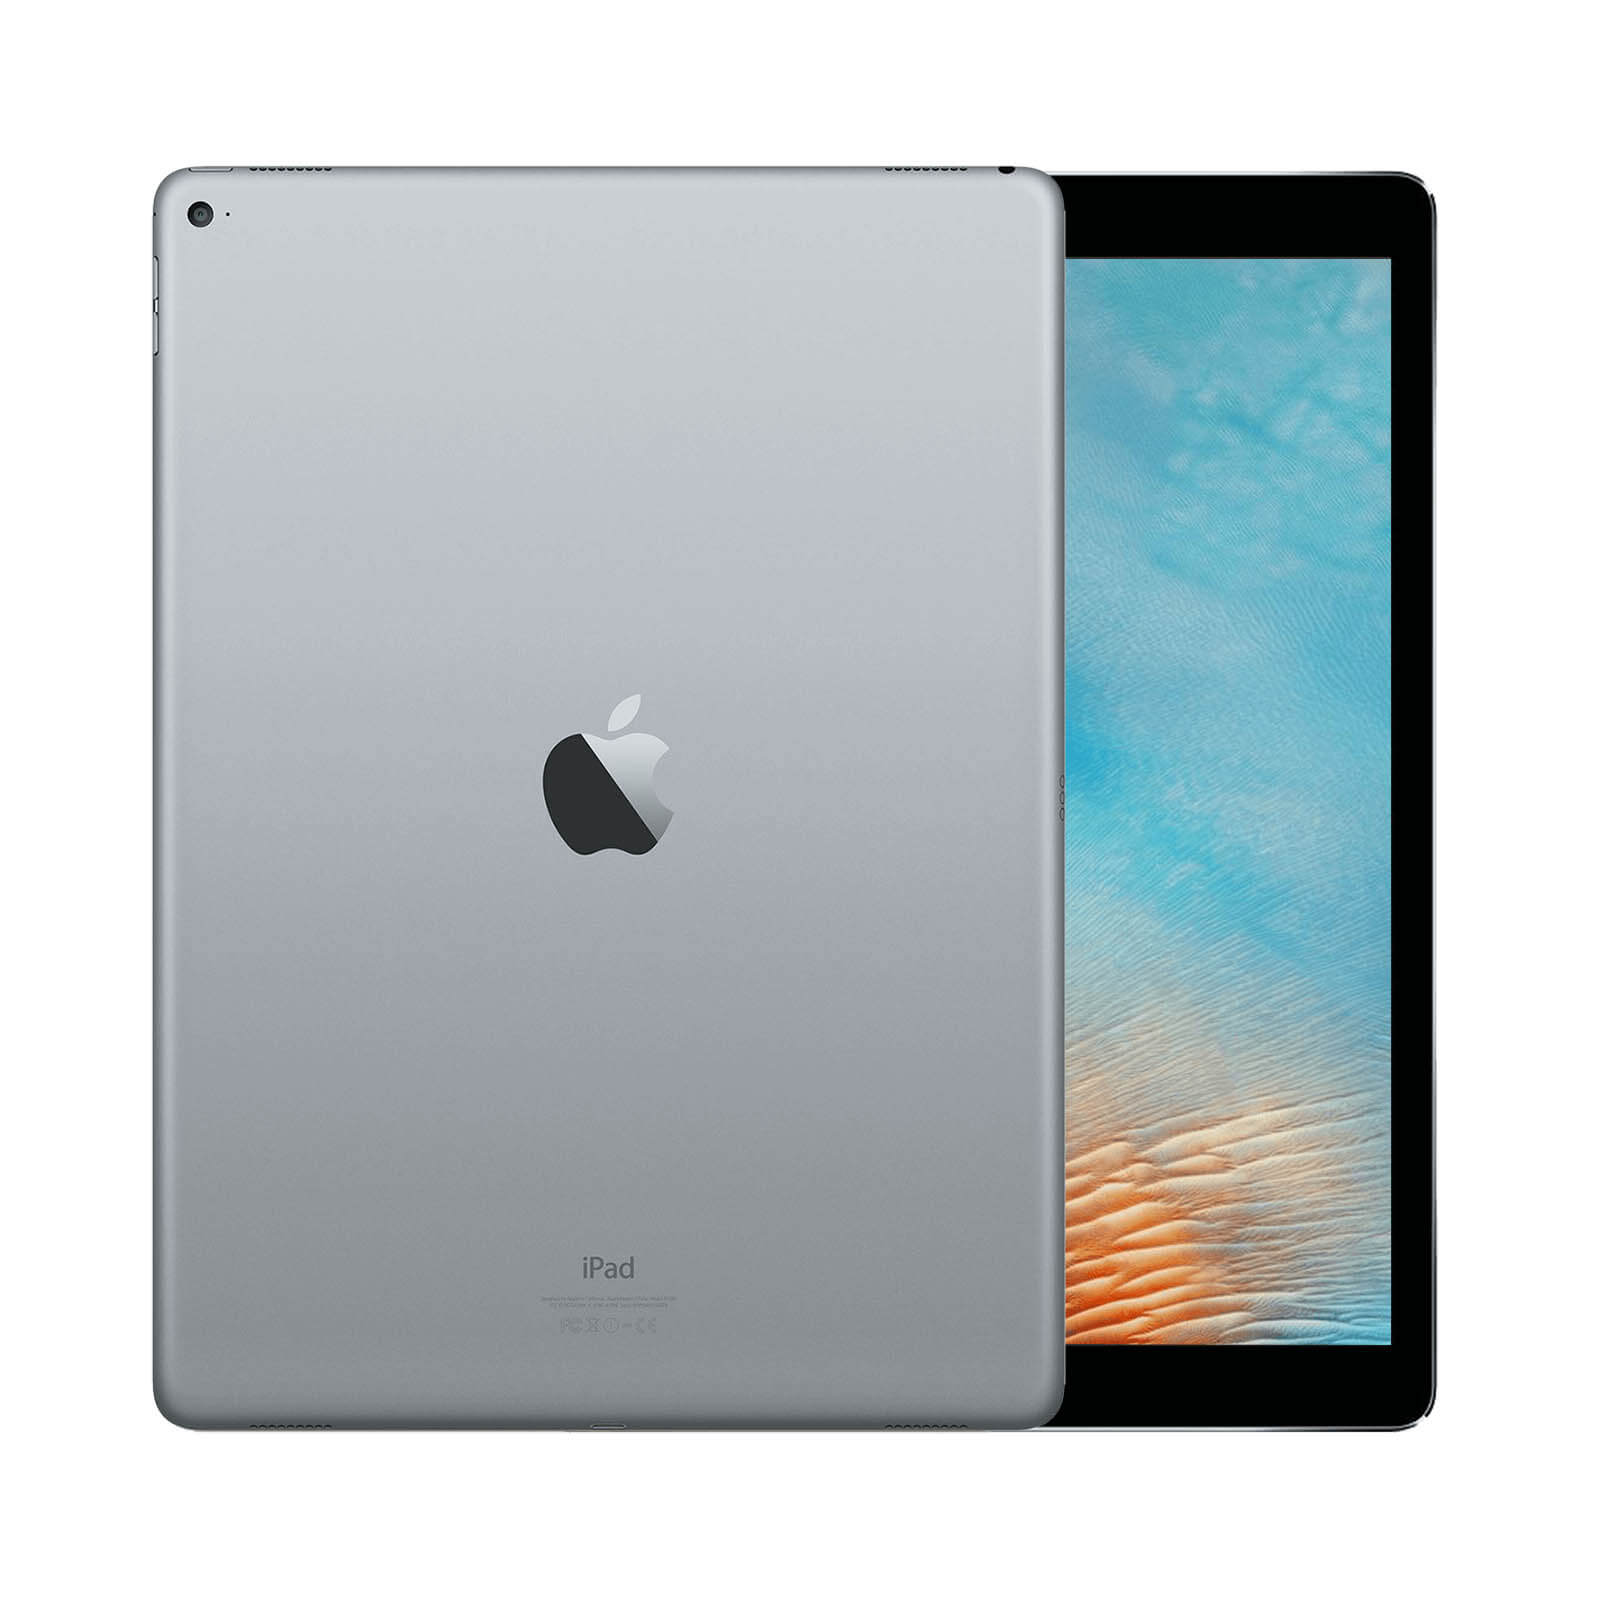 iPad Pro 12.9 Inch 2nd Gen 64GB Space Grey Very Good - WiFi